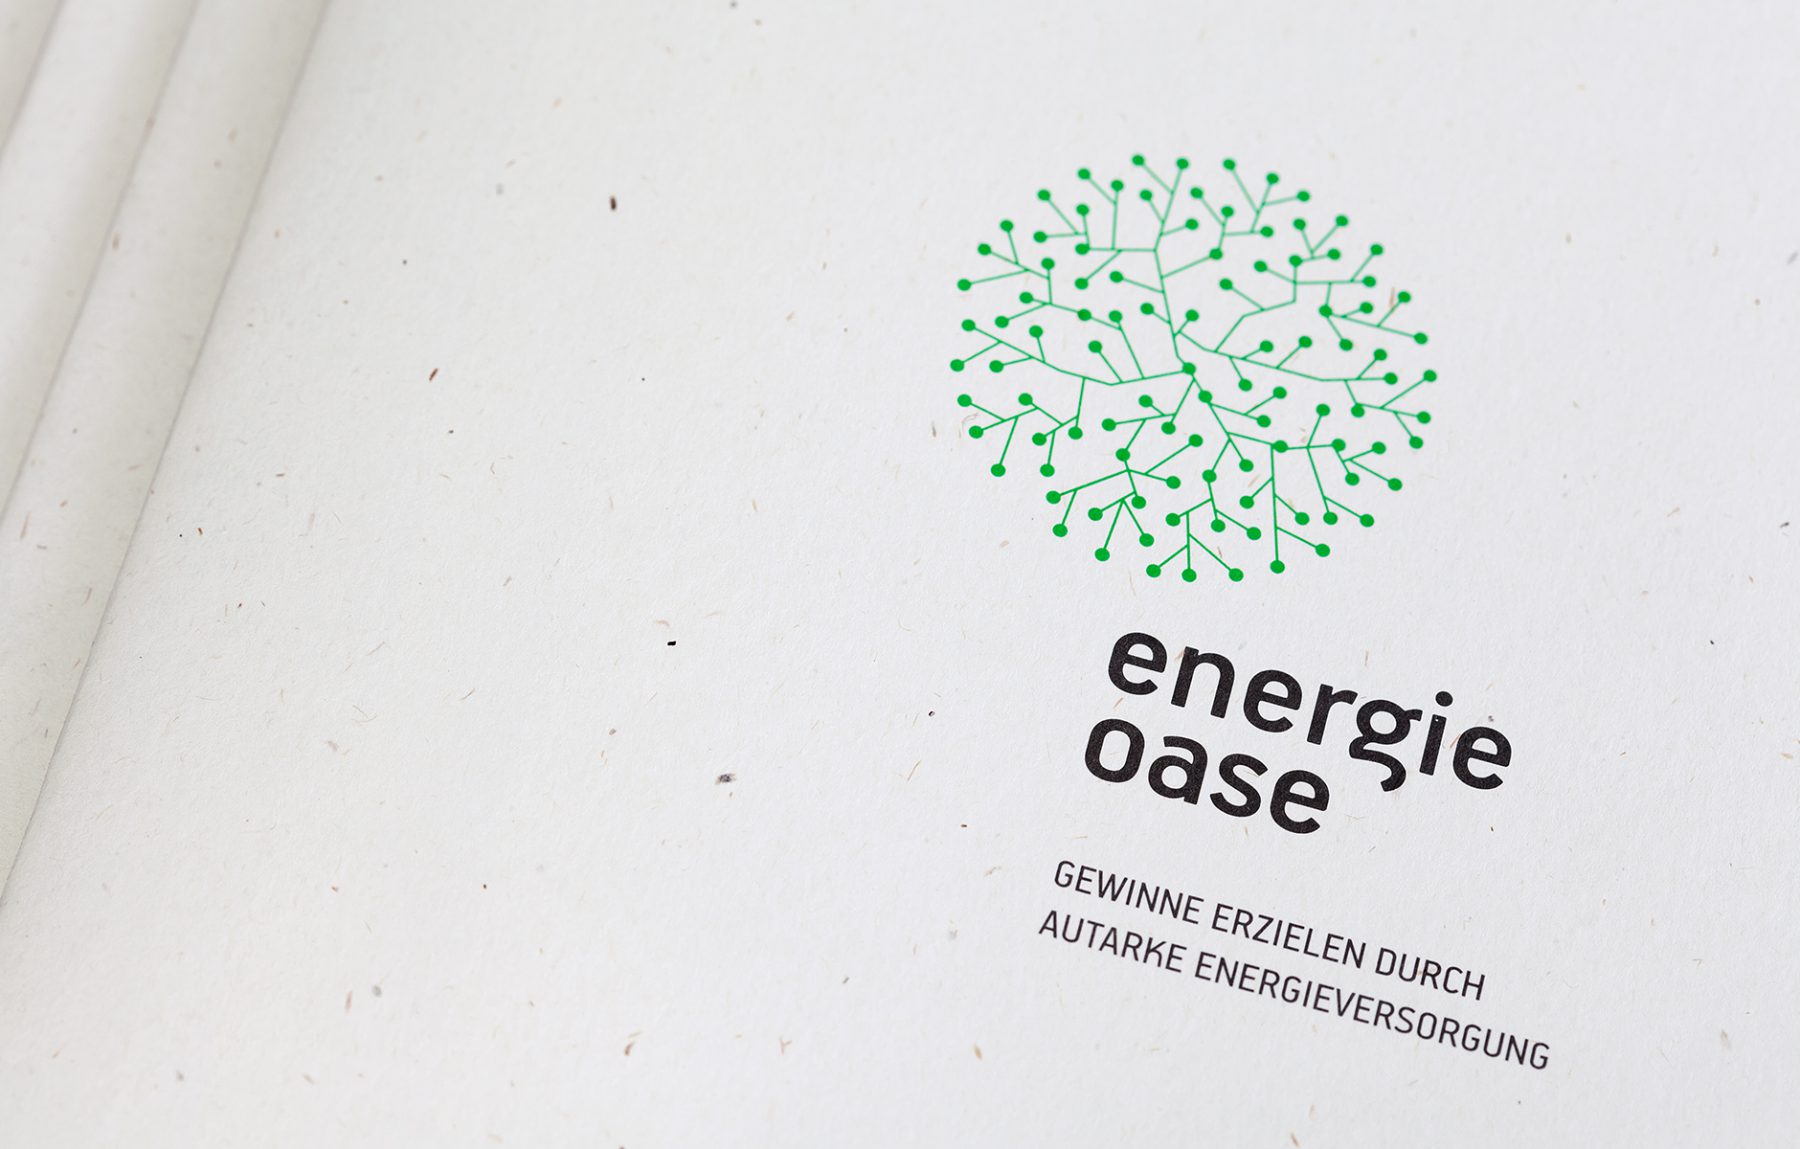 Greentech, energie oase, Leipzig, Architektur, Corporate Design